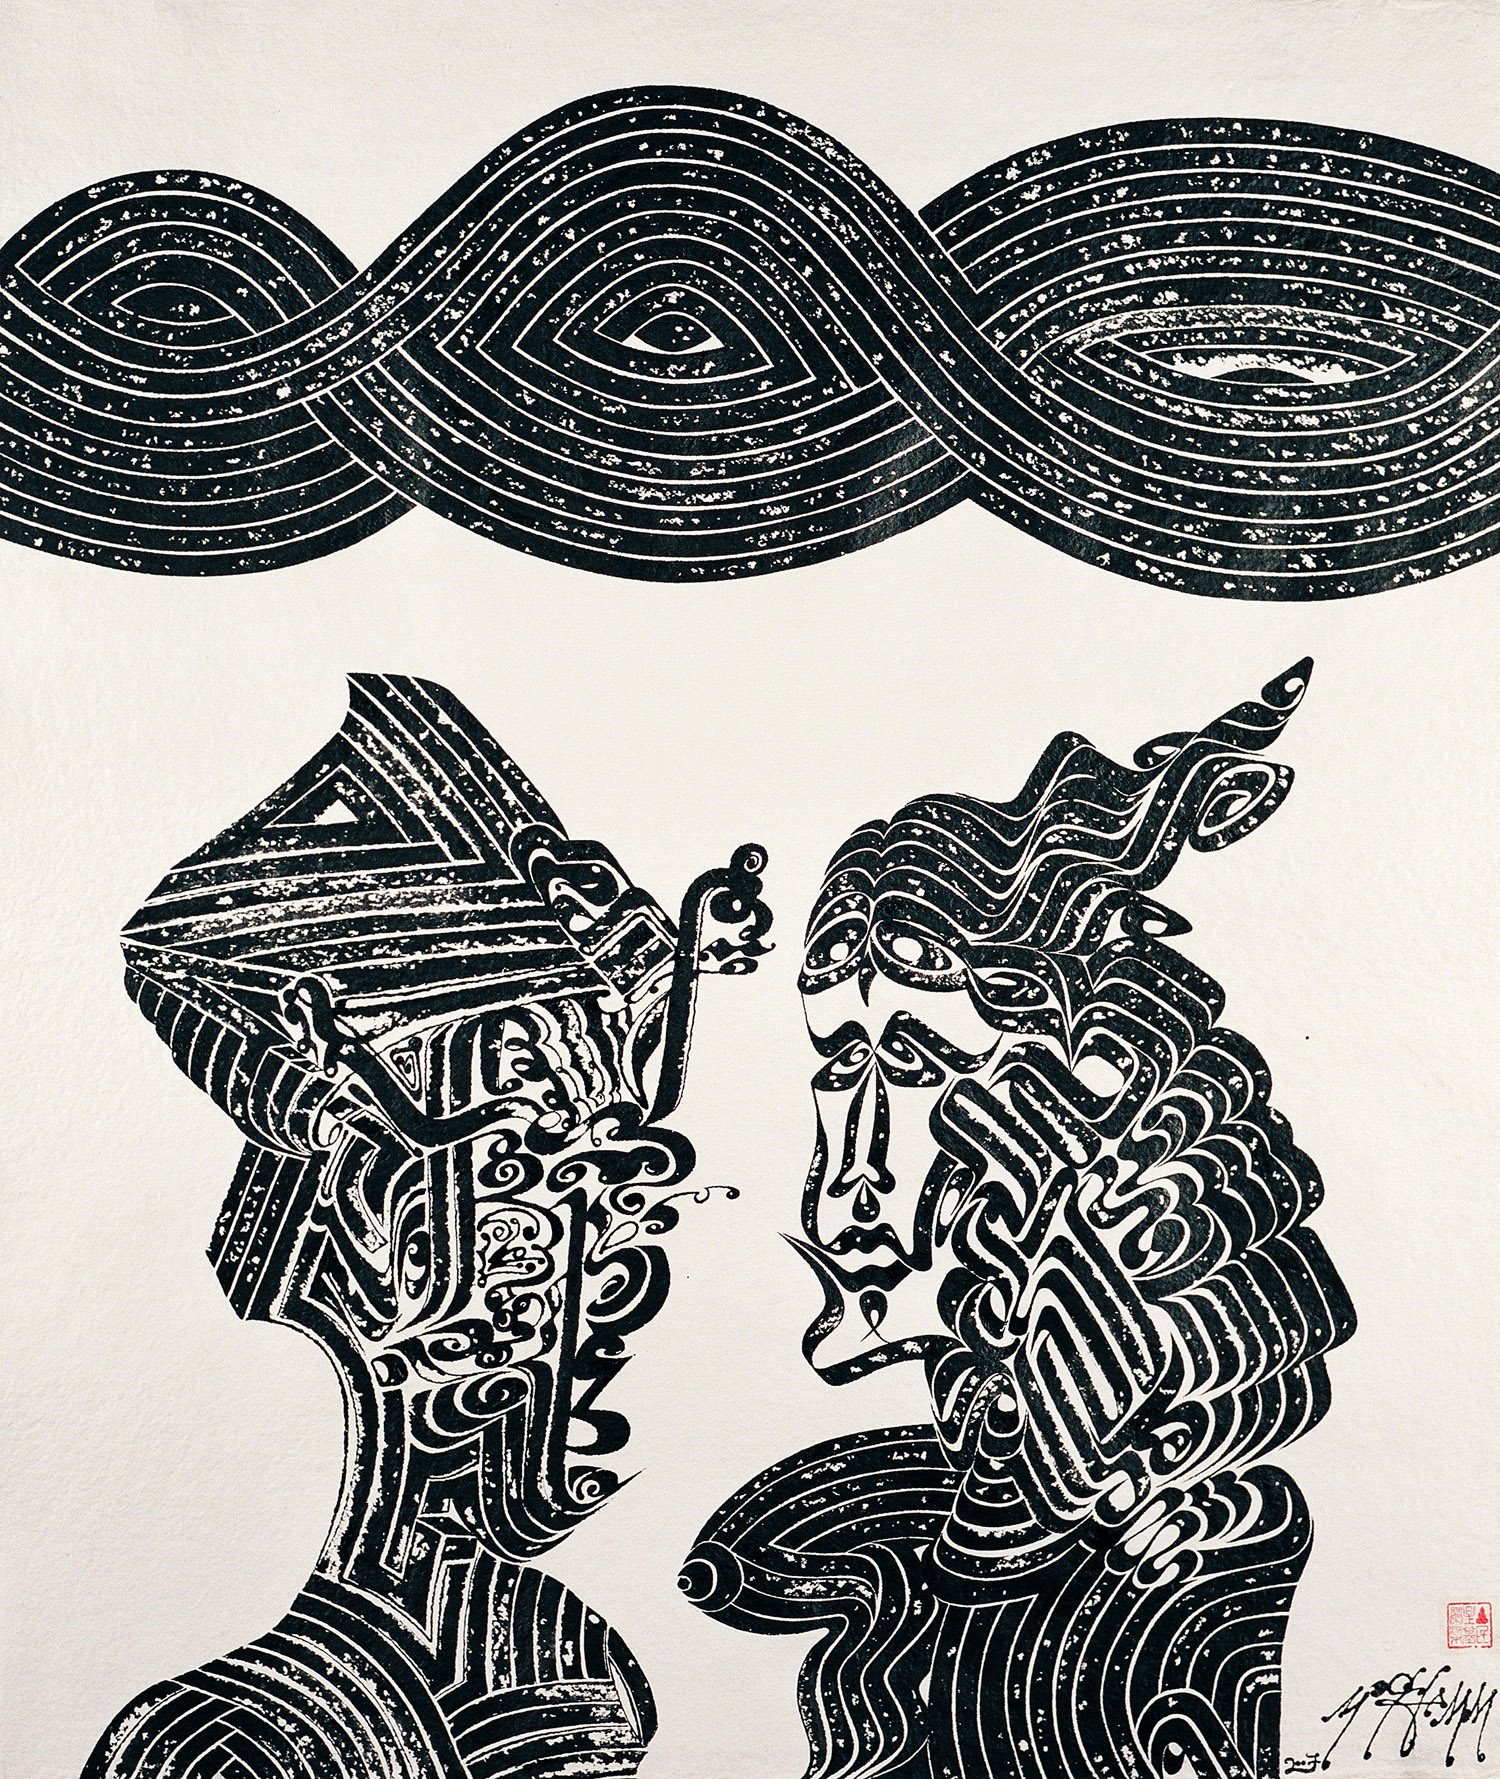  Post Modern Love, 2007 sumi ink on handmade paper 42.5 x 35.5 inch 